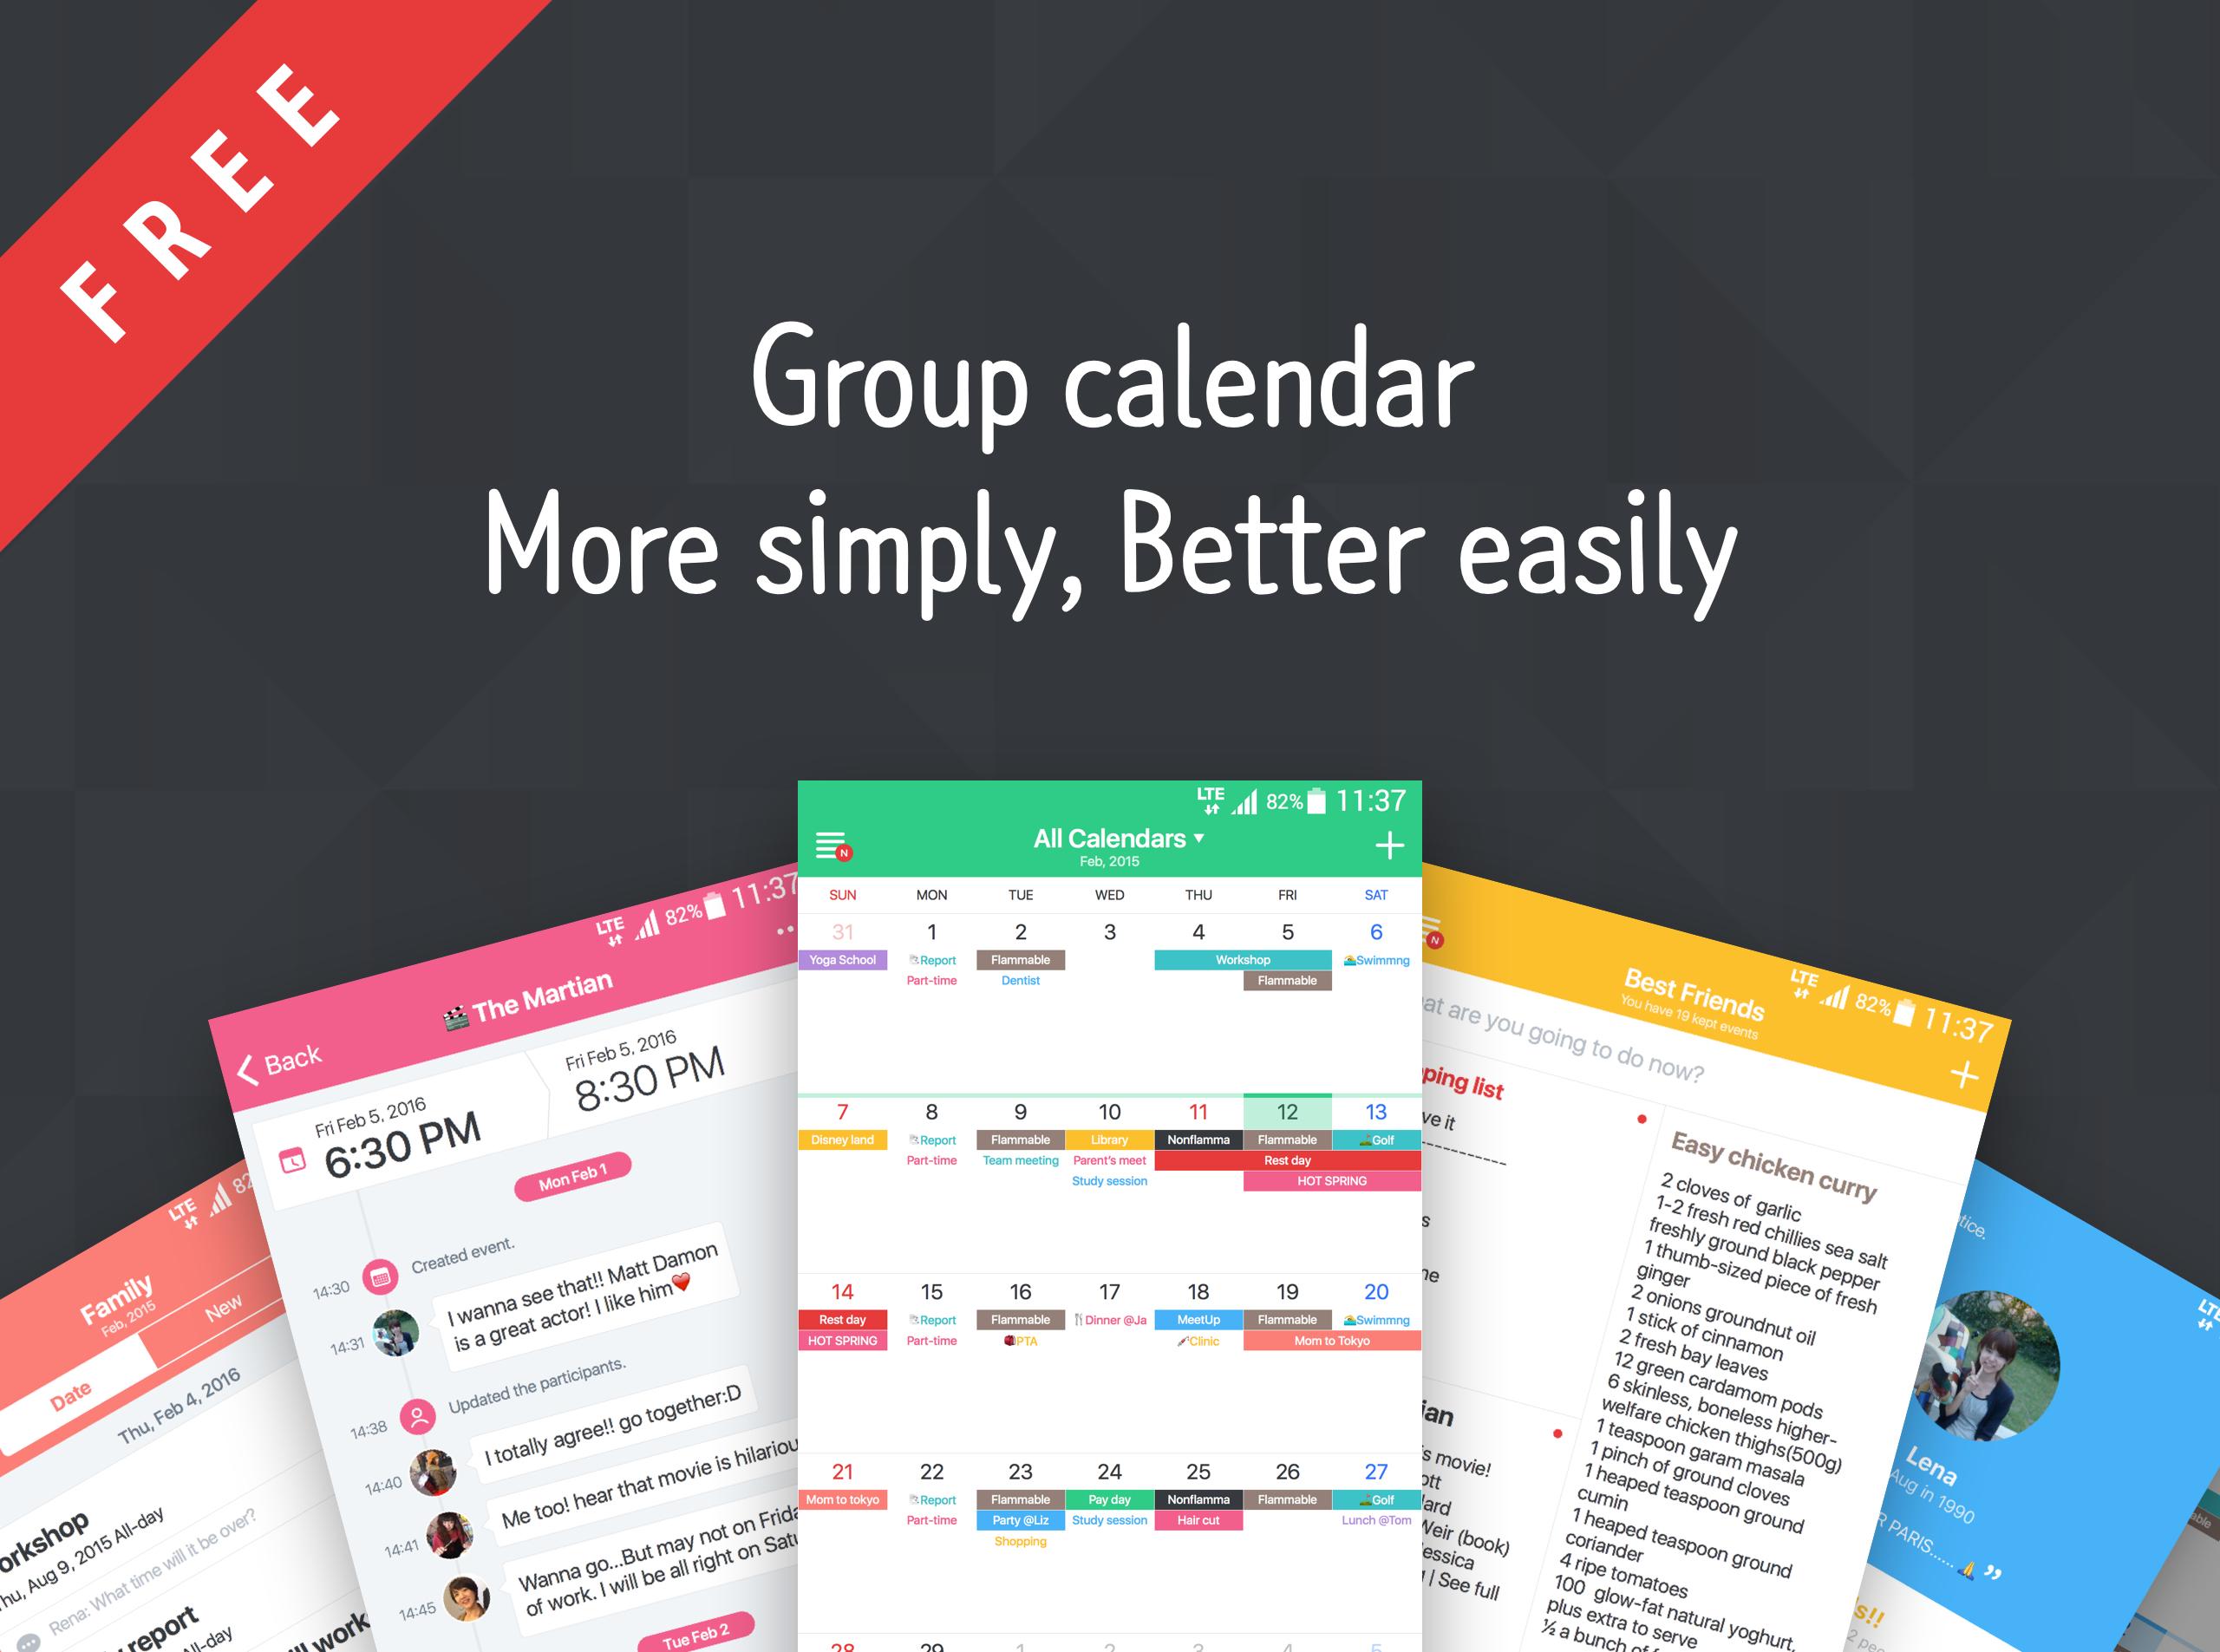 Android application TimeTree - Shared Calendar screenshort